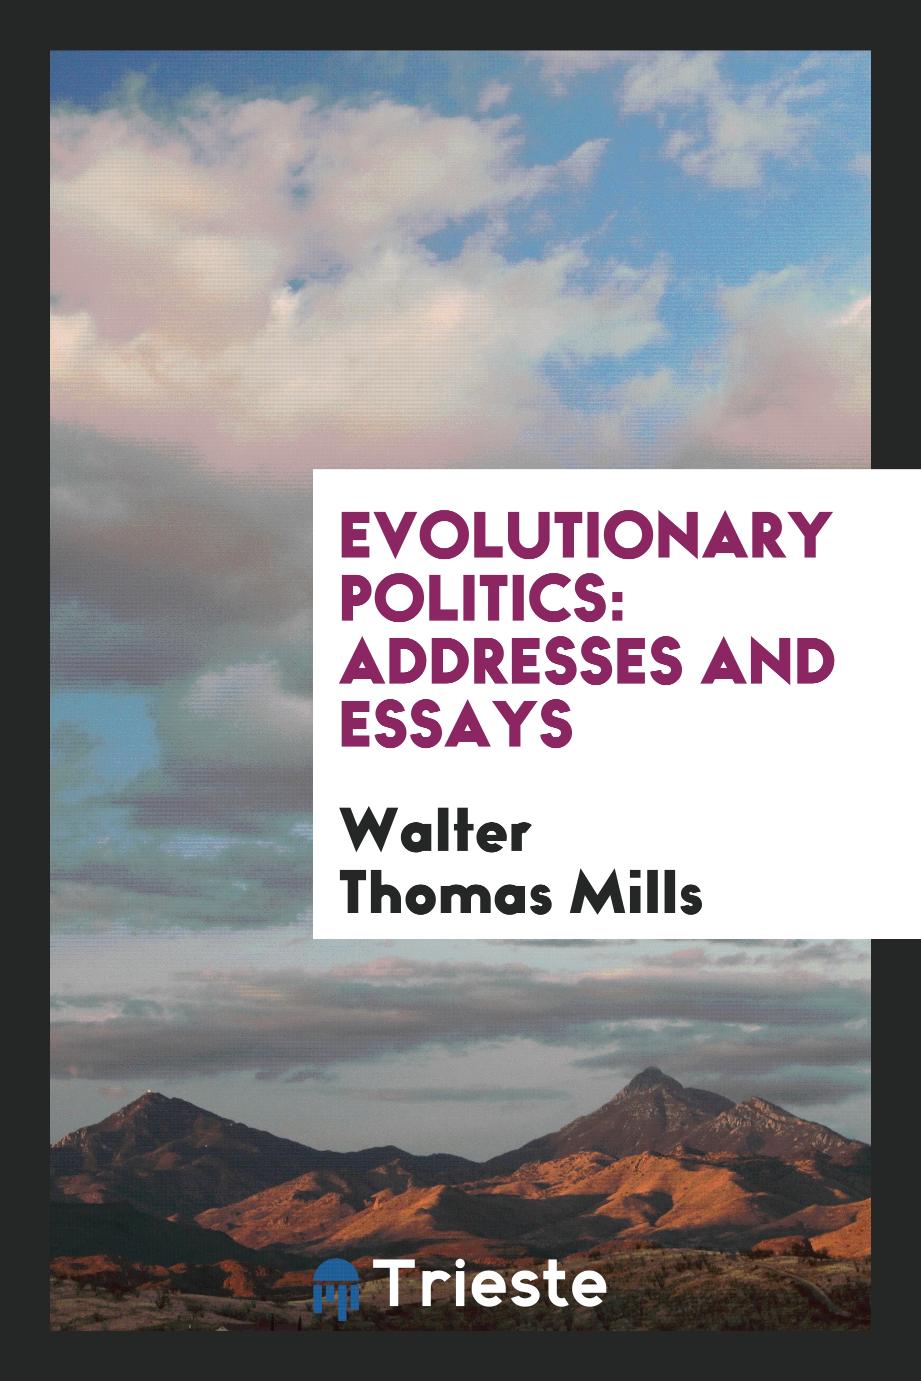 Evolutionary politics: addresses and essays